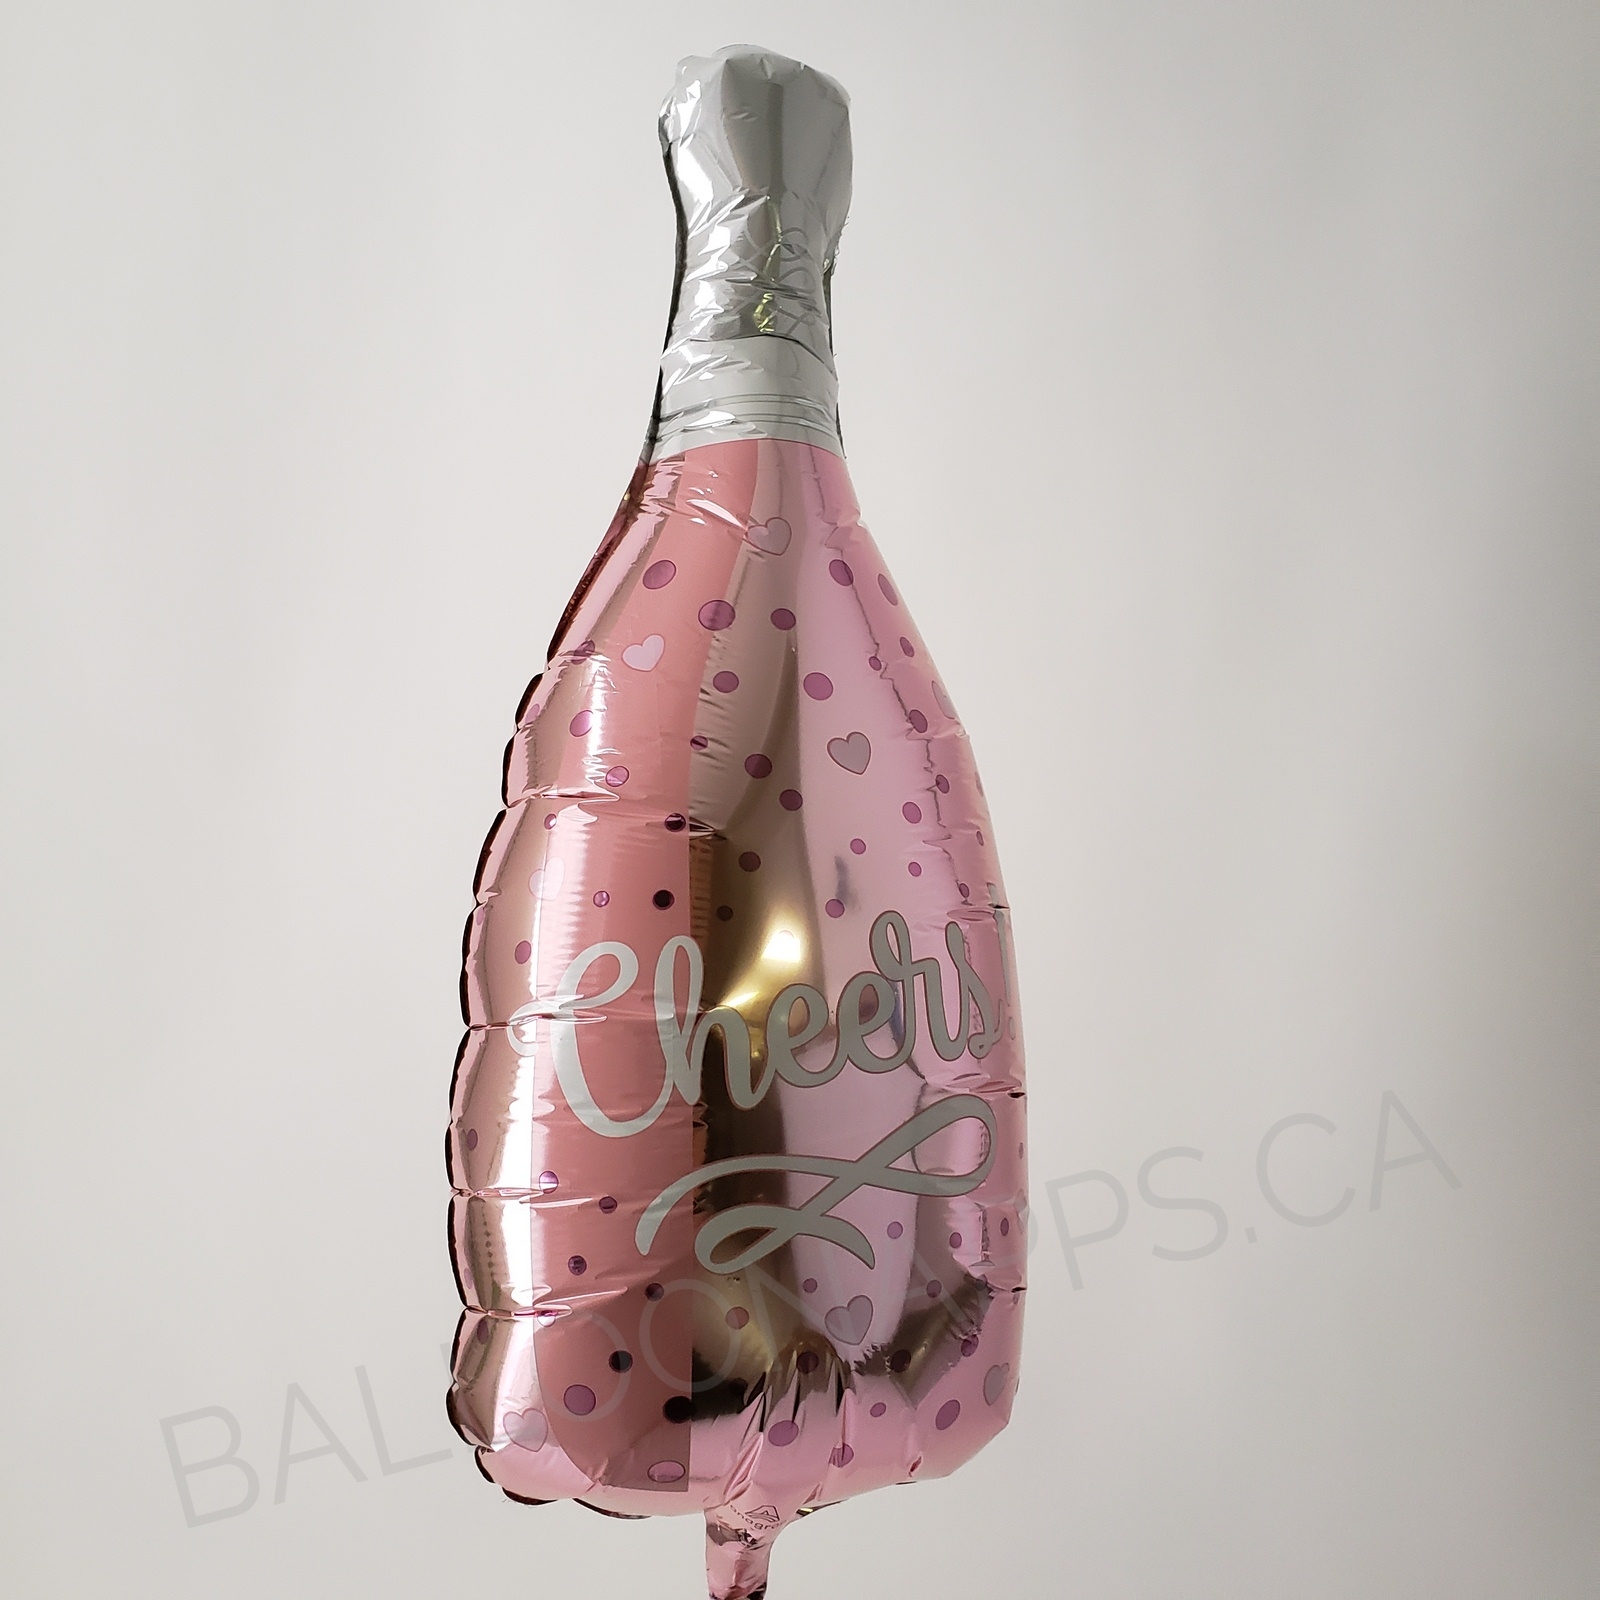 Cheers Rose Bottle Supershape balloon 